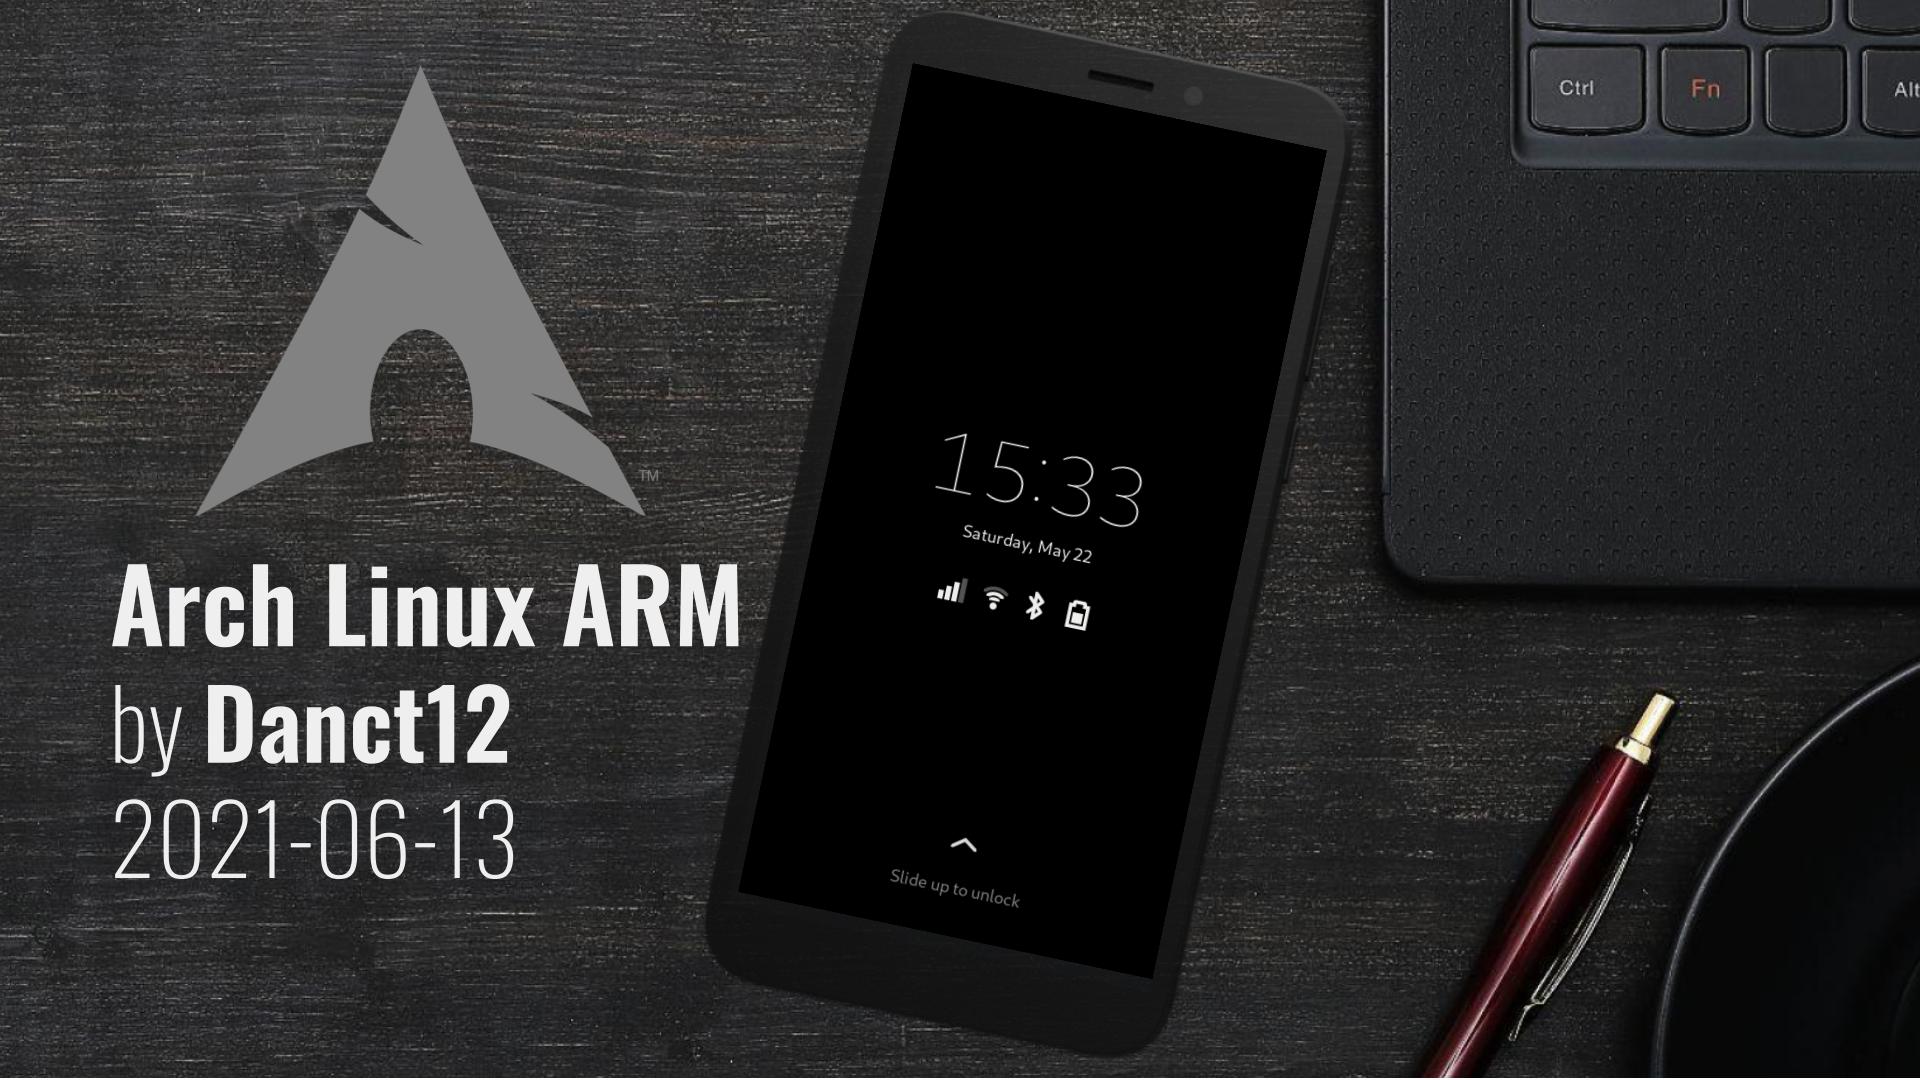 Arch Linux ARM 20210613 – Kernel 5.12.7, Phosh 0.11 and Plasma Mobile images